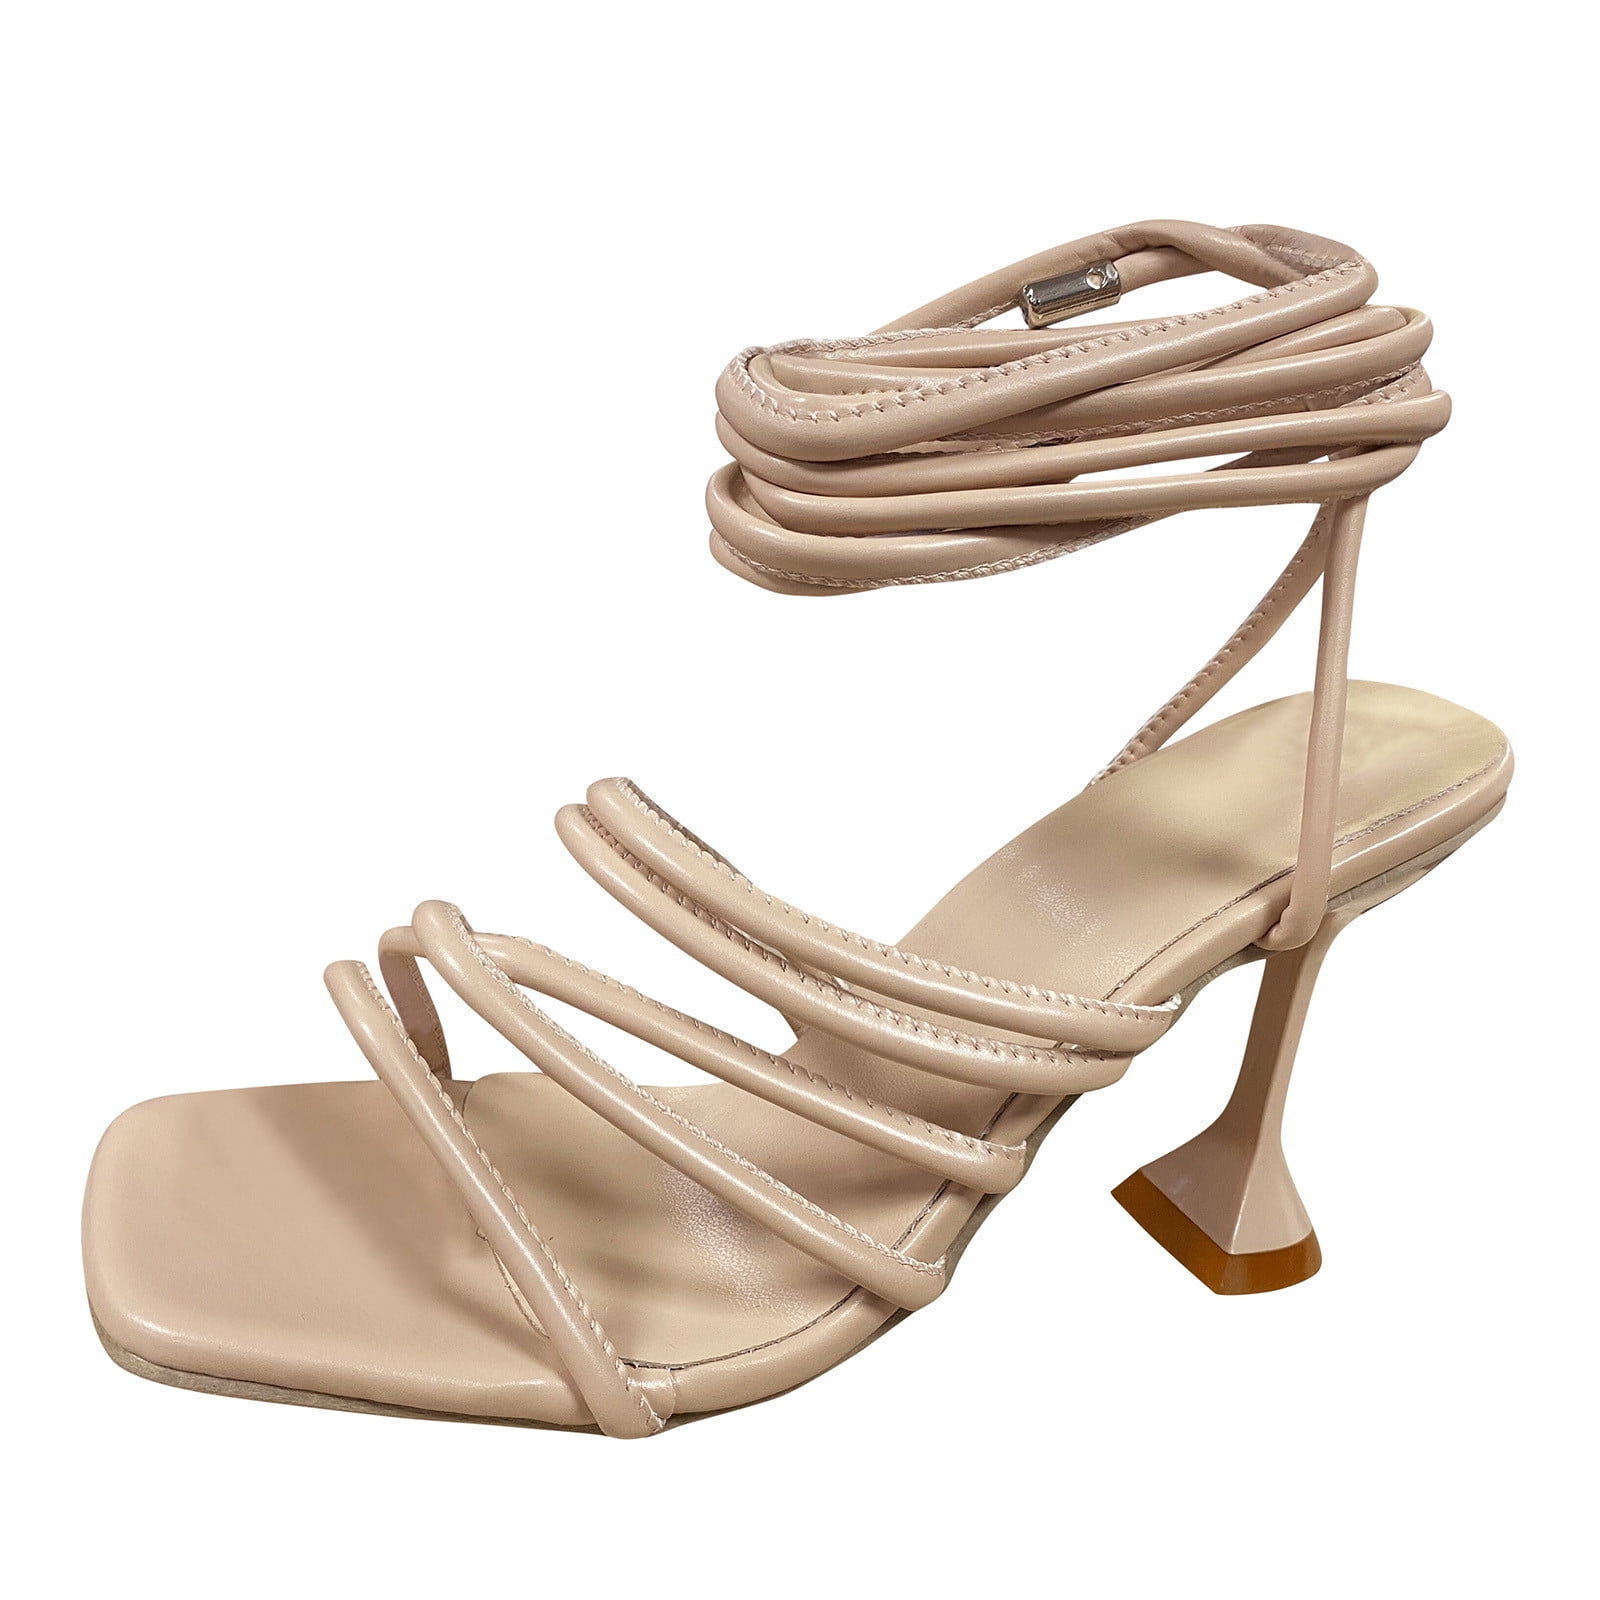 HSMQHJWE Womens Heeled Sandals Heel Braided Square Toe Slingback Buckle  Ankle Strap Casual Sandal Shoes Beige,7) 